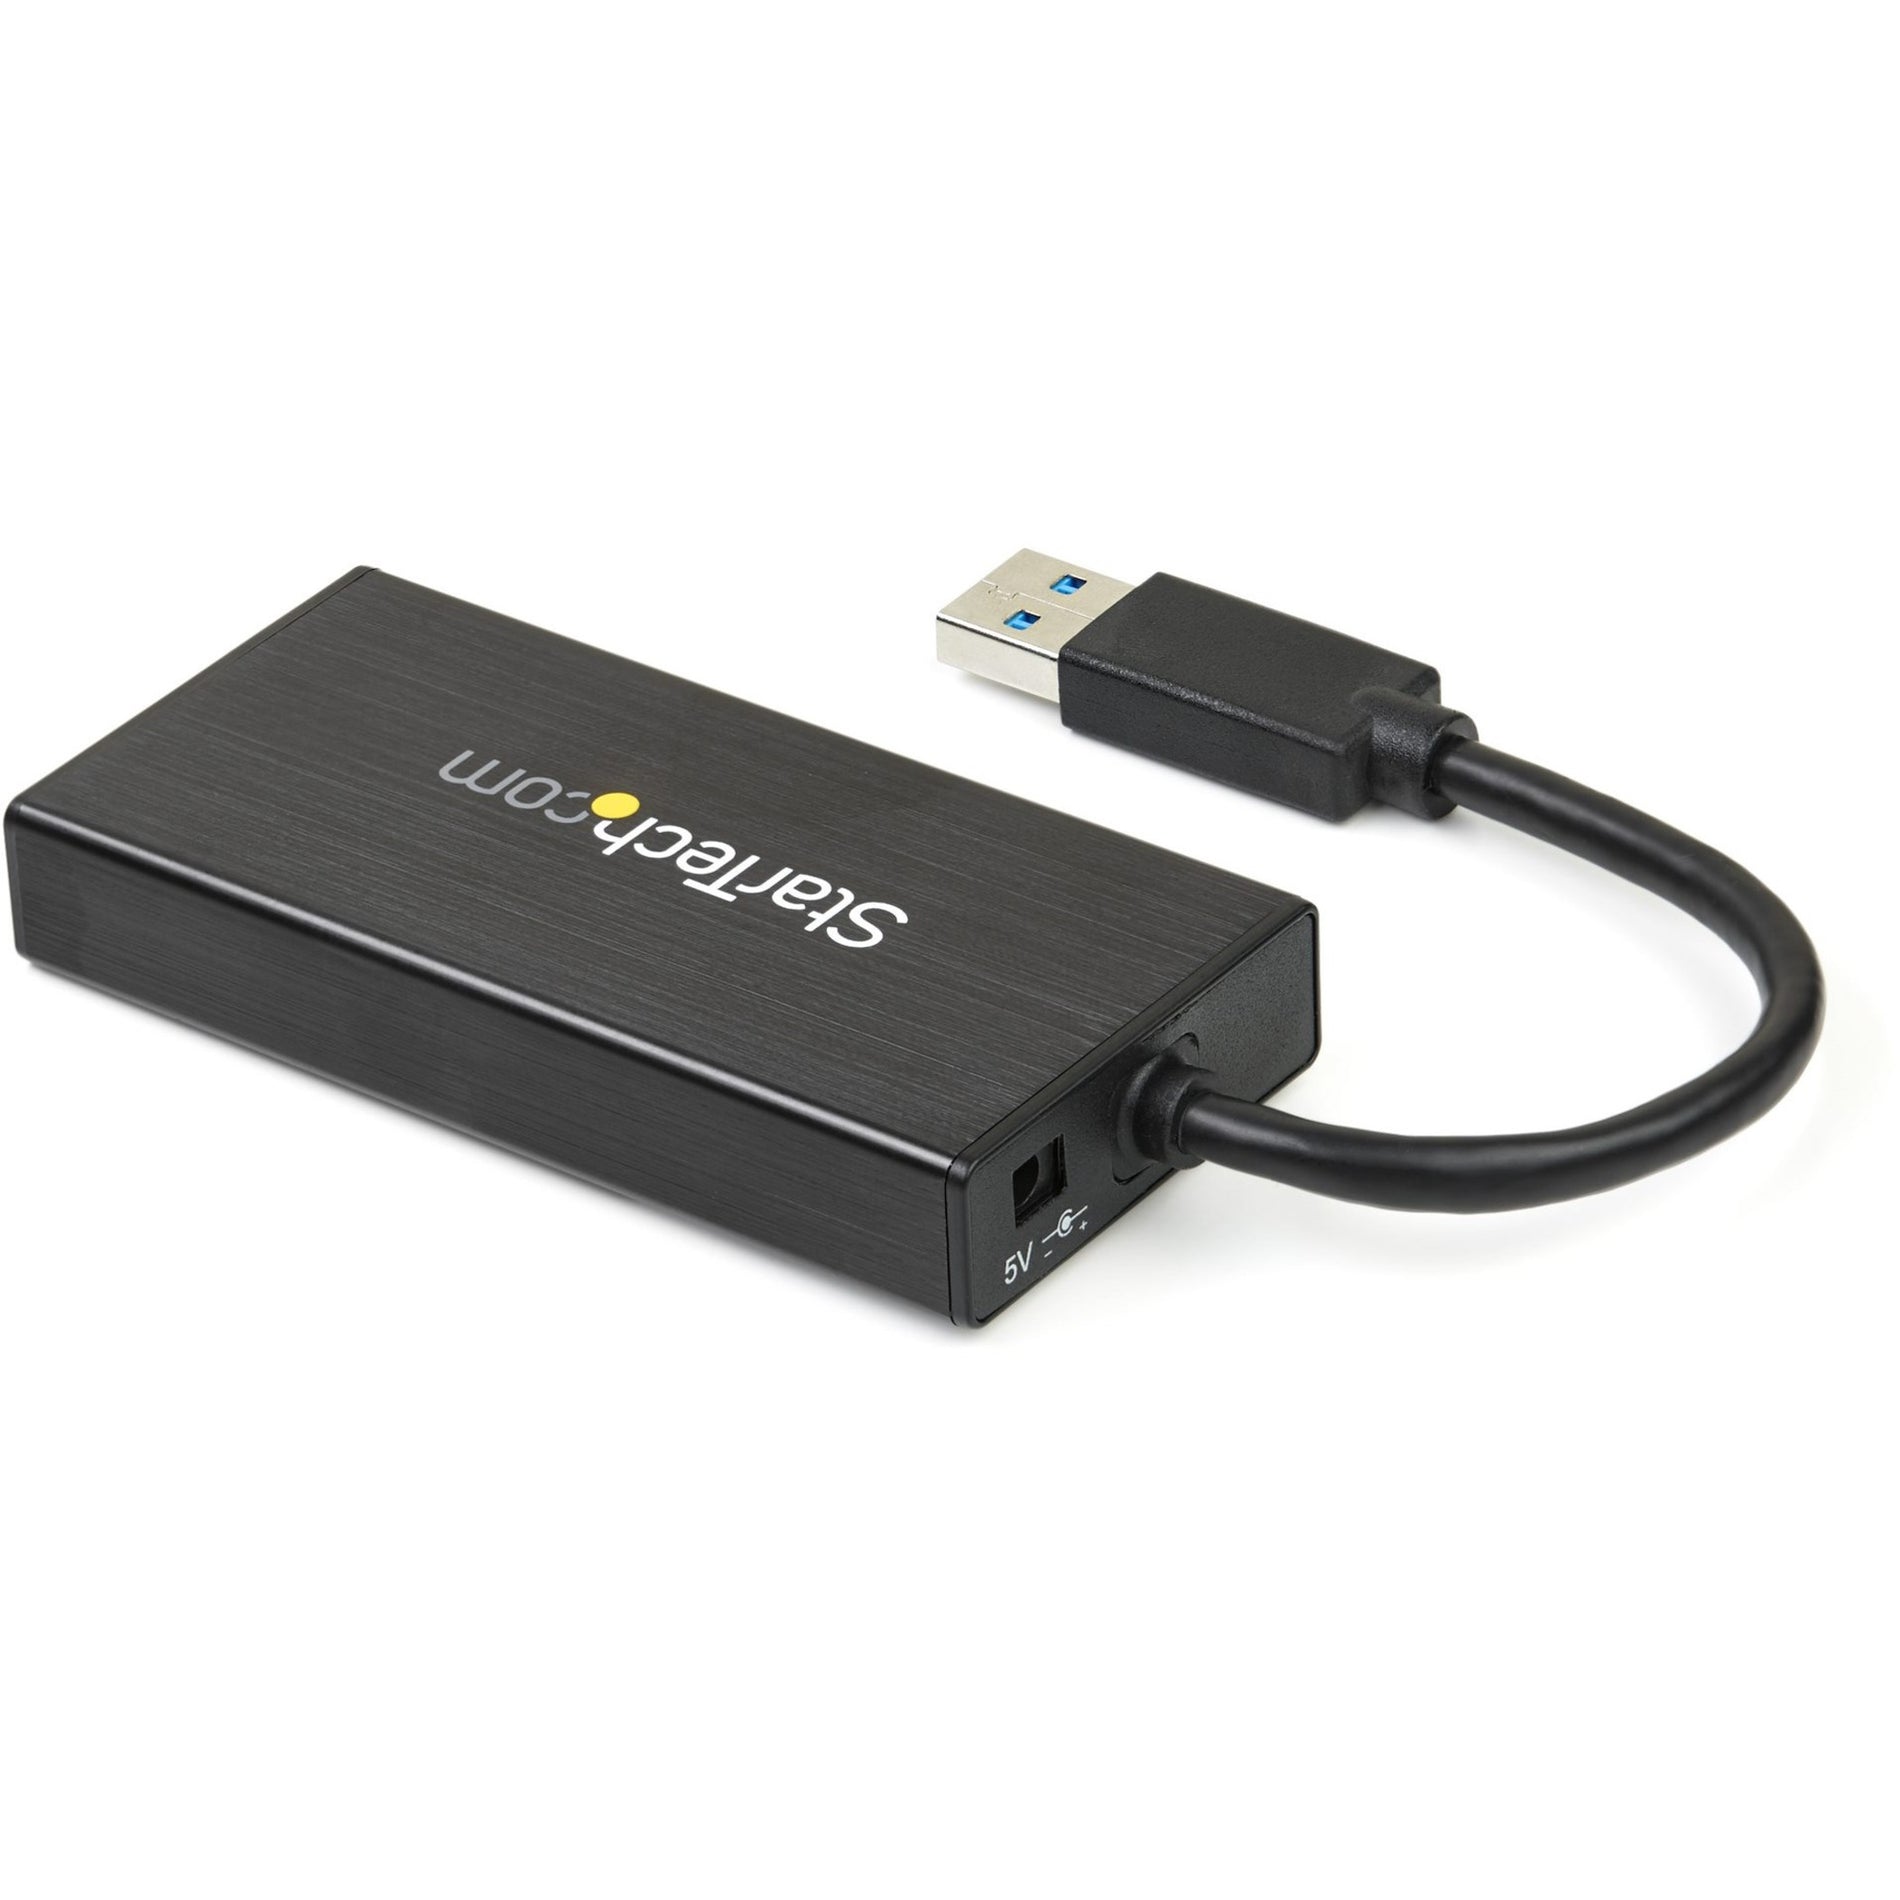 StarTech.com ST3300GU3B Aluminum USB 3.0 Hub with Gigabit Ethernet Adapter NIC, 3 Port Portable, Black